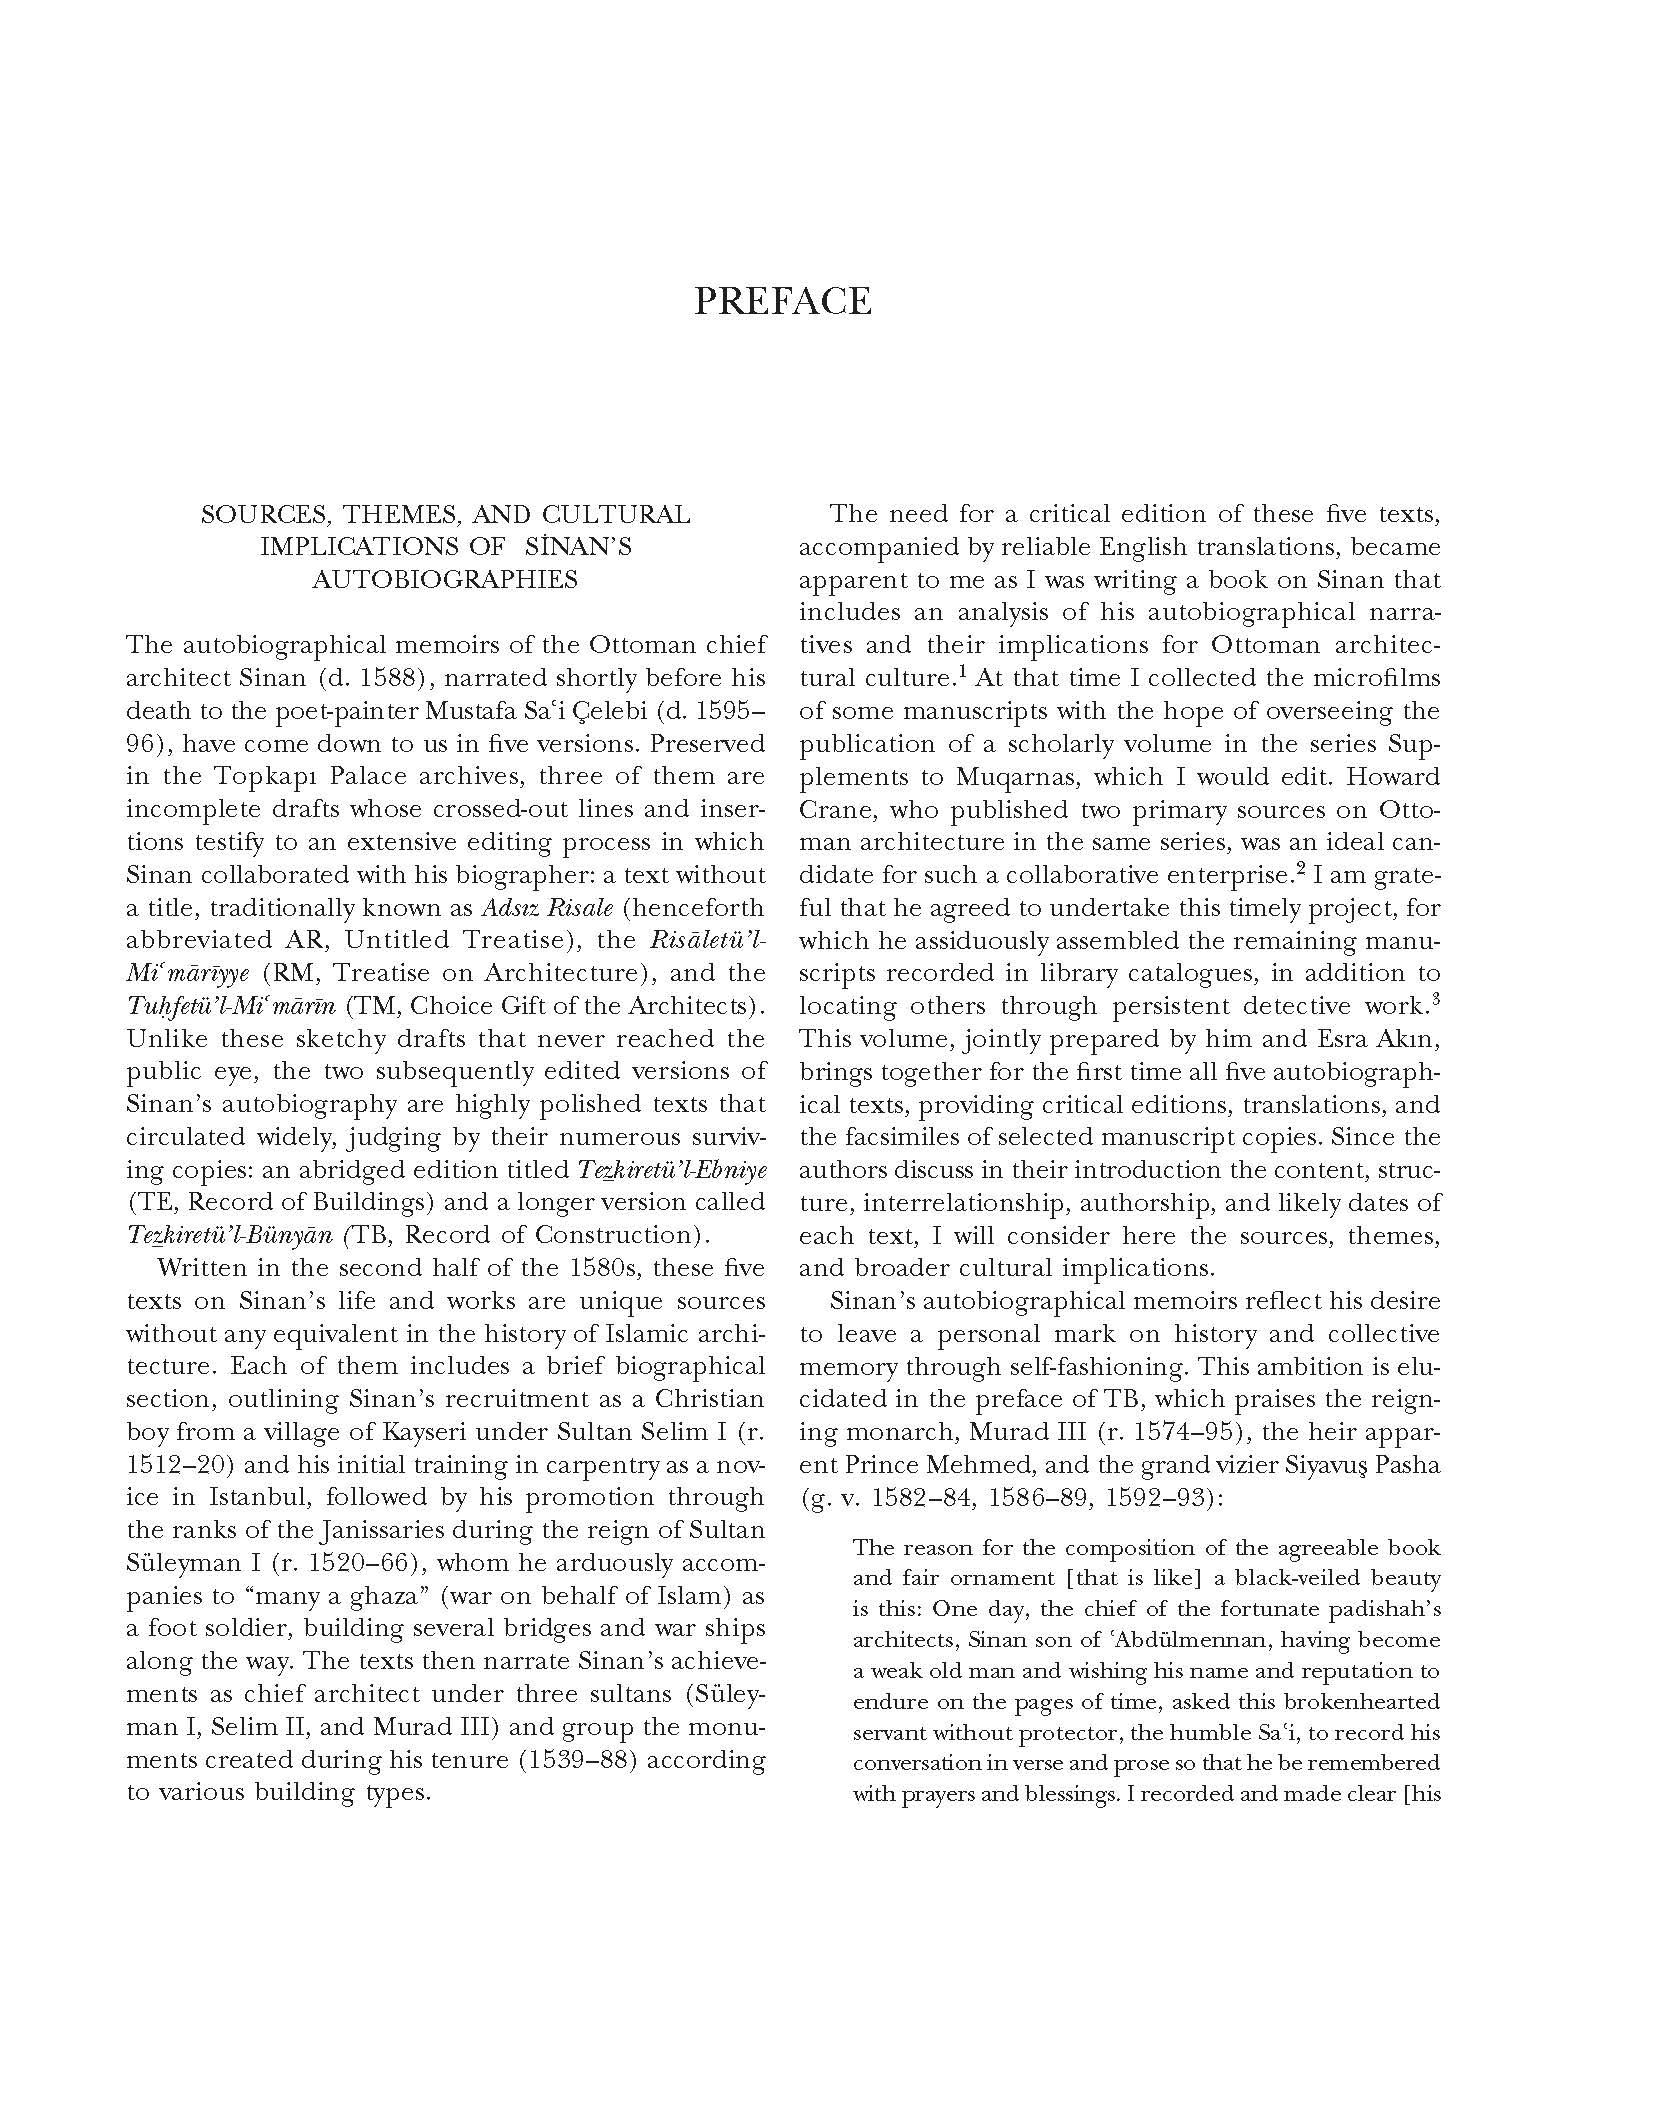 Sinan's Autobiographies: Five Sixteenth-Century Texts. Preface.